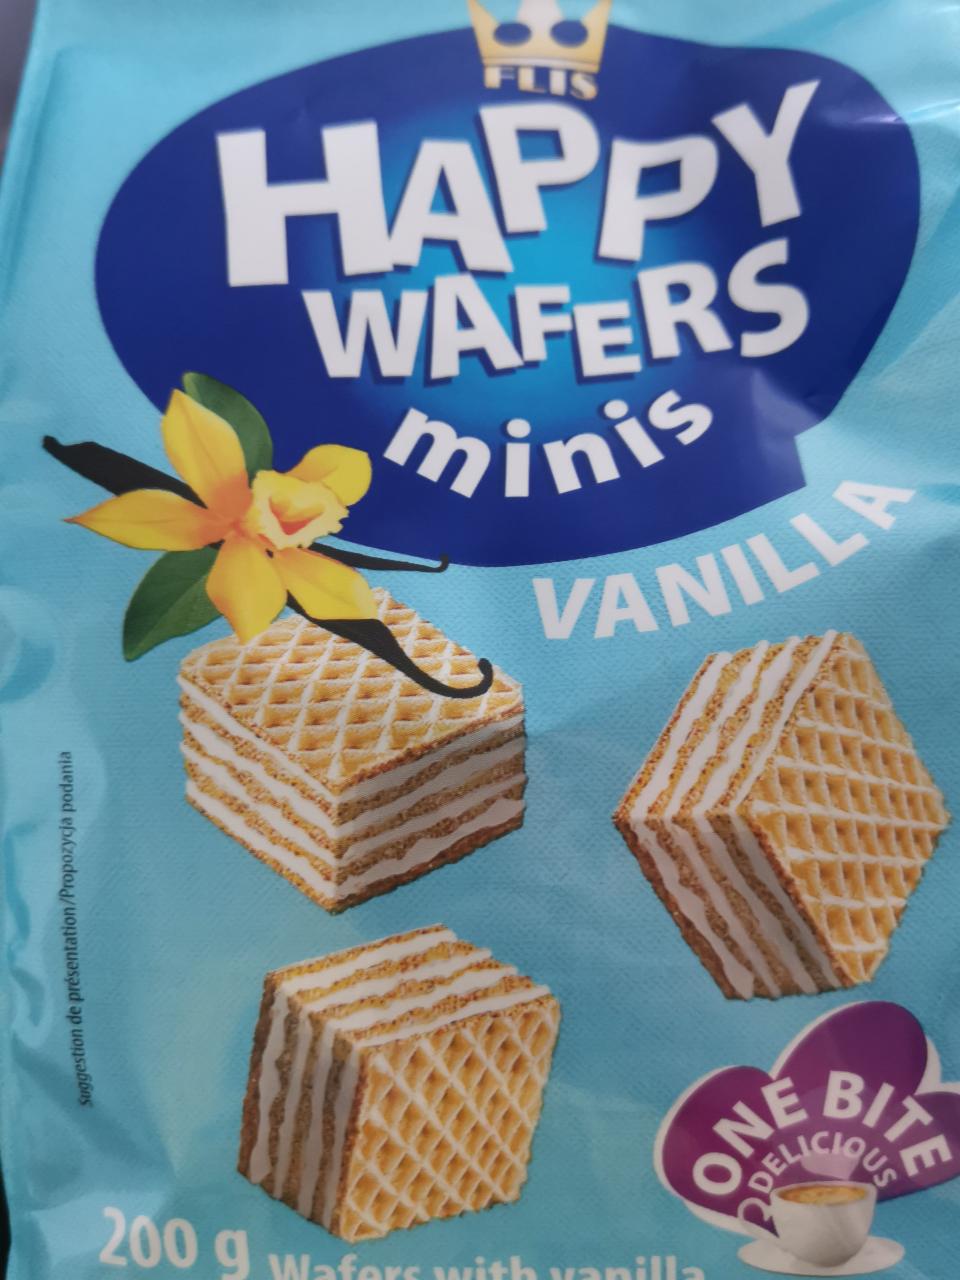 Fotografie - Happy wafers minis vanilla